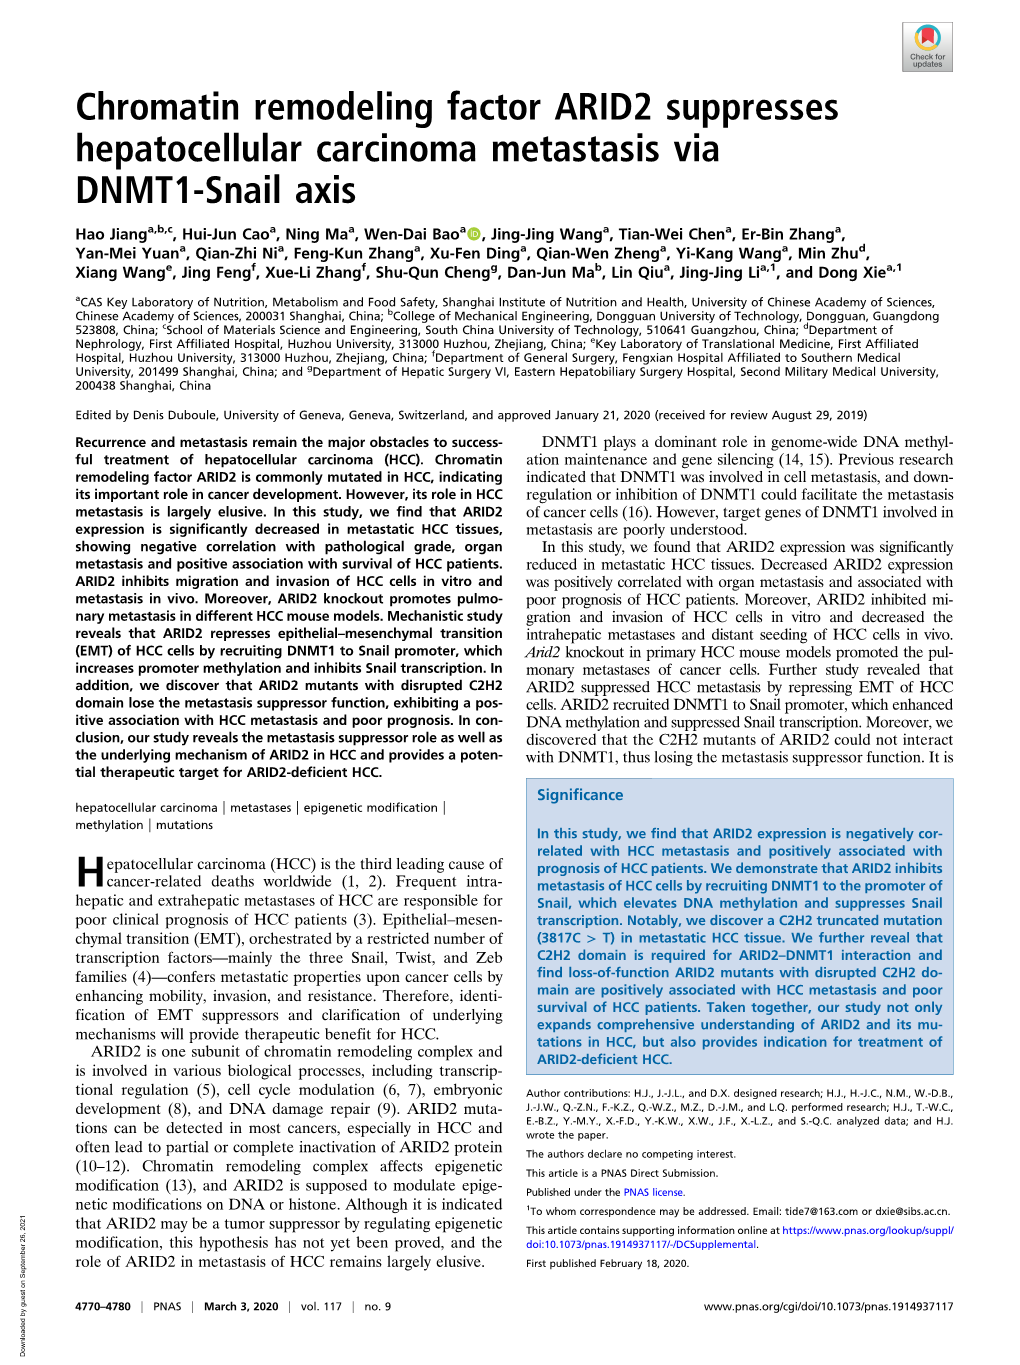 Chromatin Remodeling Factor ARID2 Suppresses Hepatocellular Carcinoma Metastasis Via DNMT1-Snail Axis